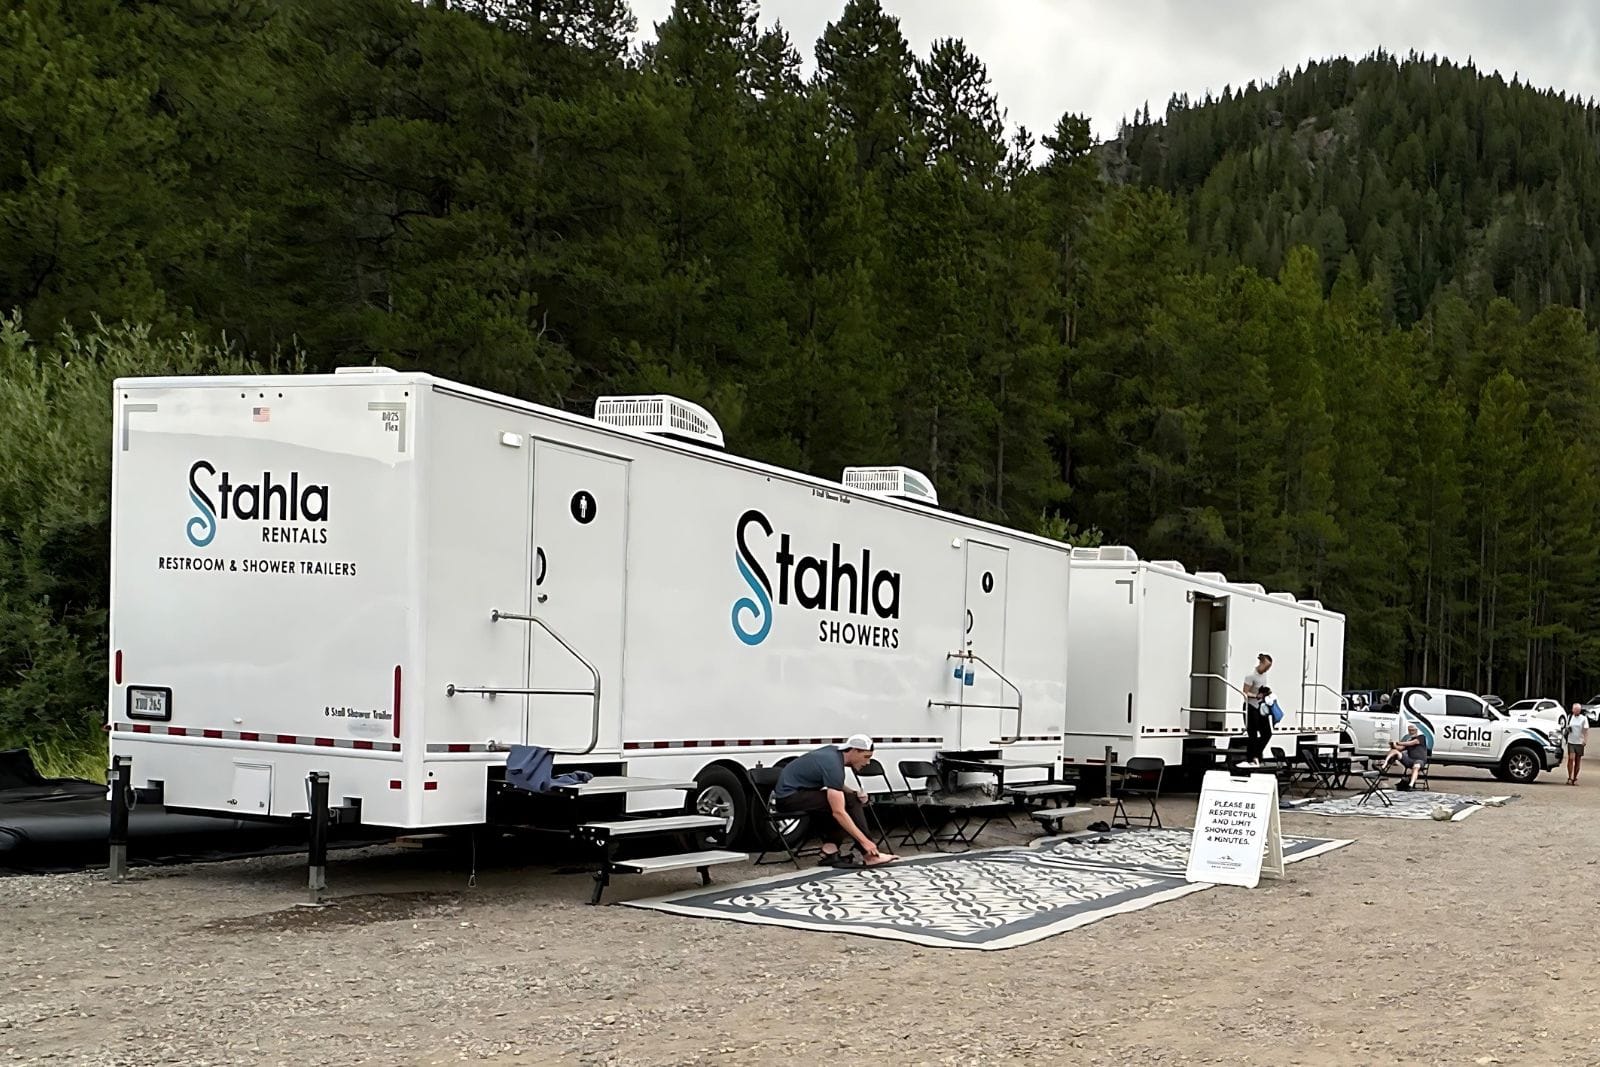 Stahla Rentals mobile Shower trailers parked outdoors in Omaha,Nebraska